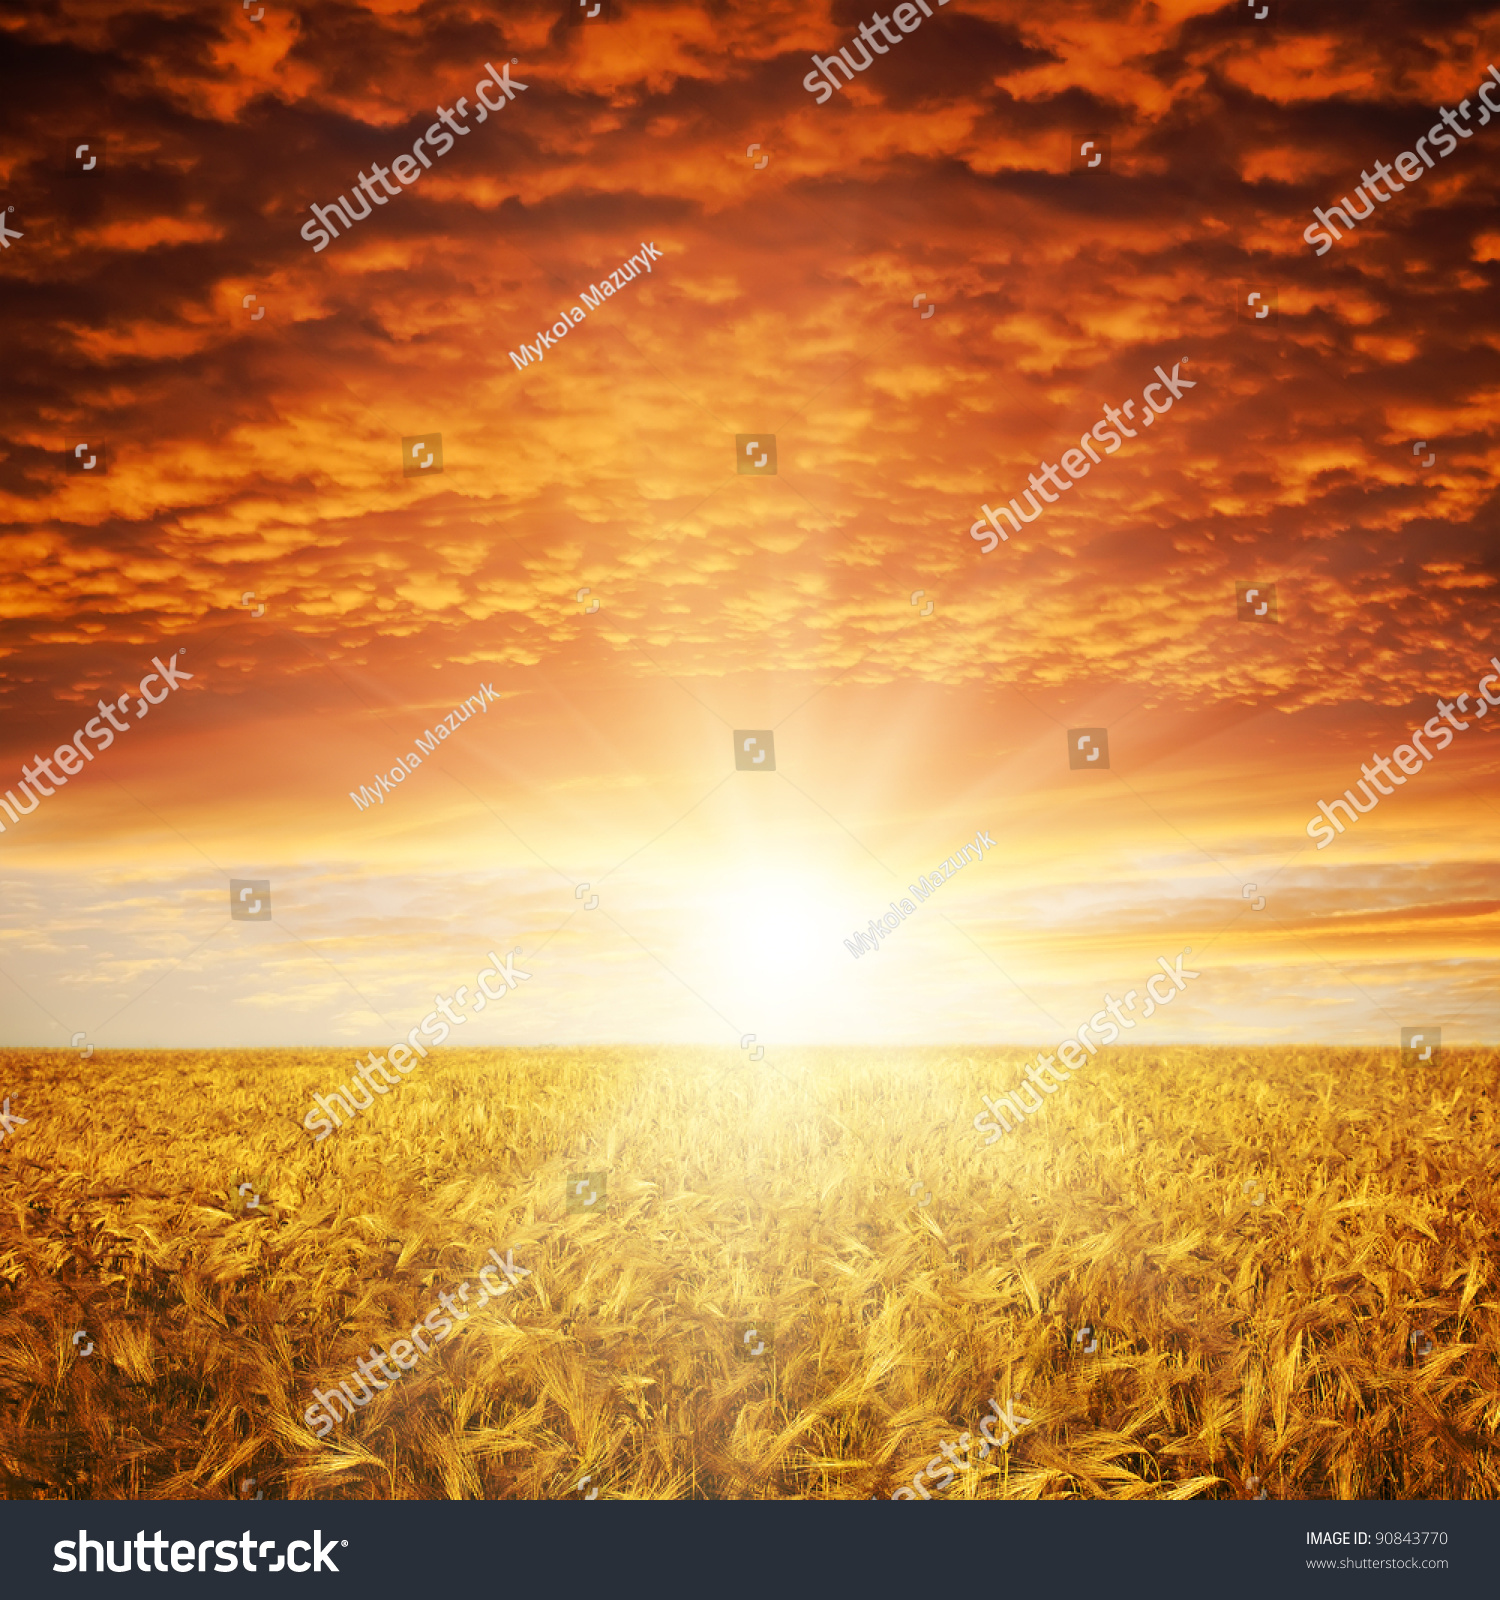 golden sunset over wheat field #90843770